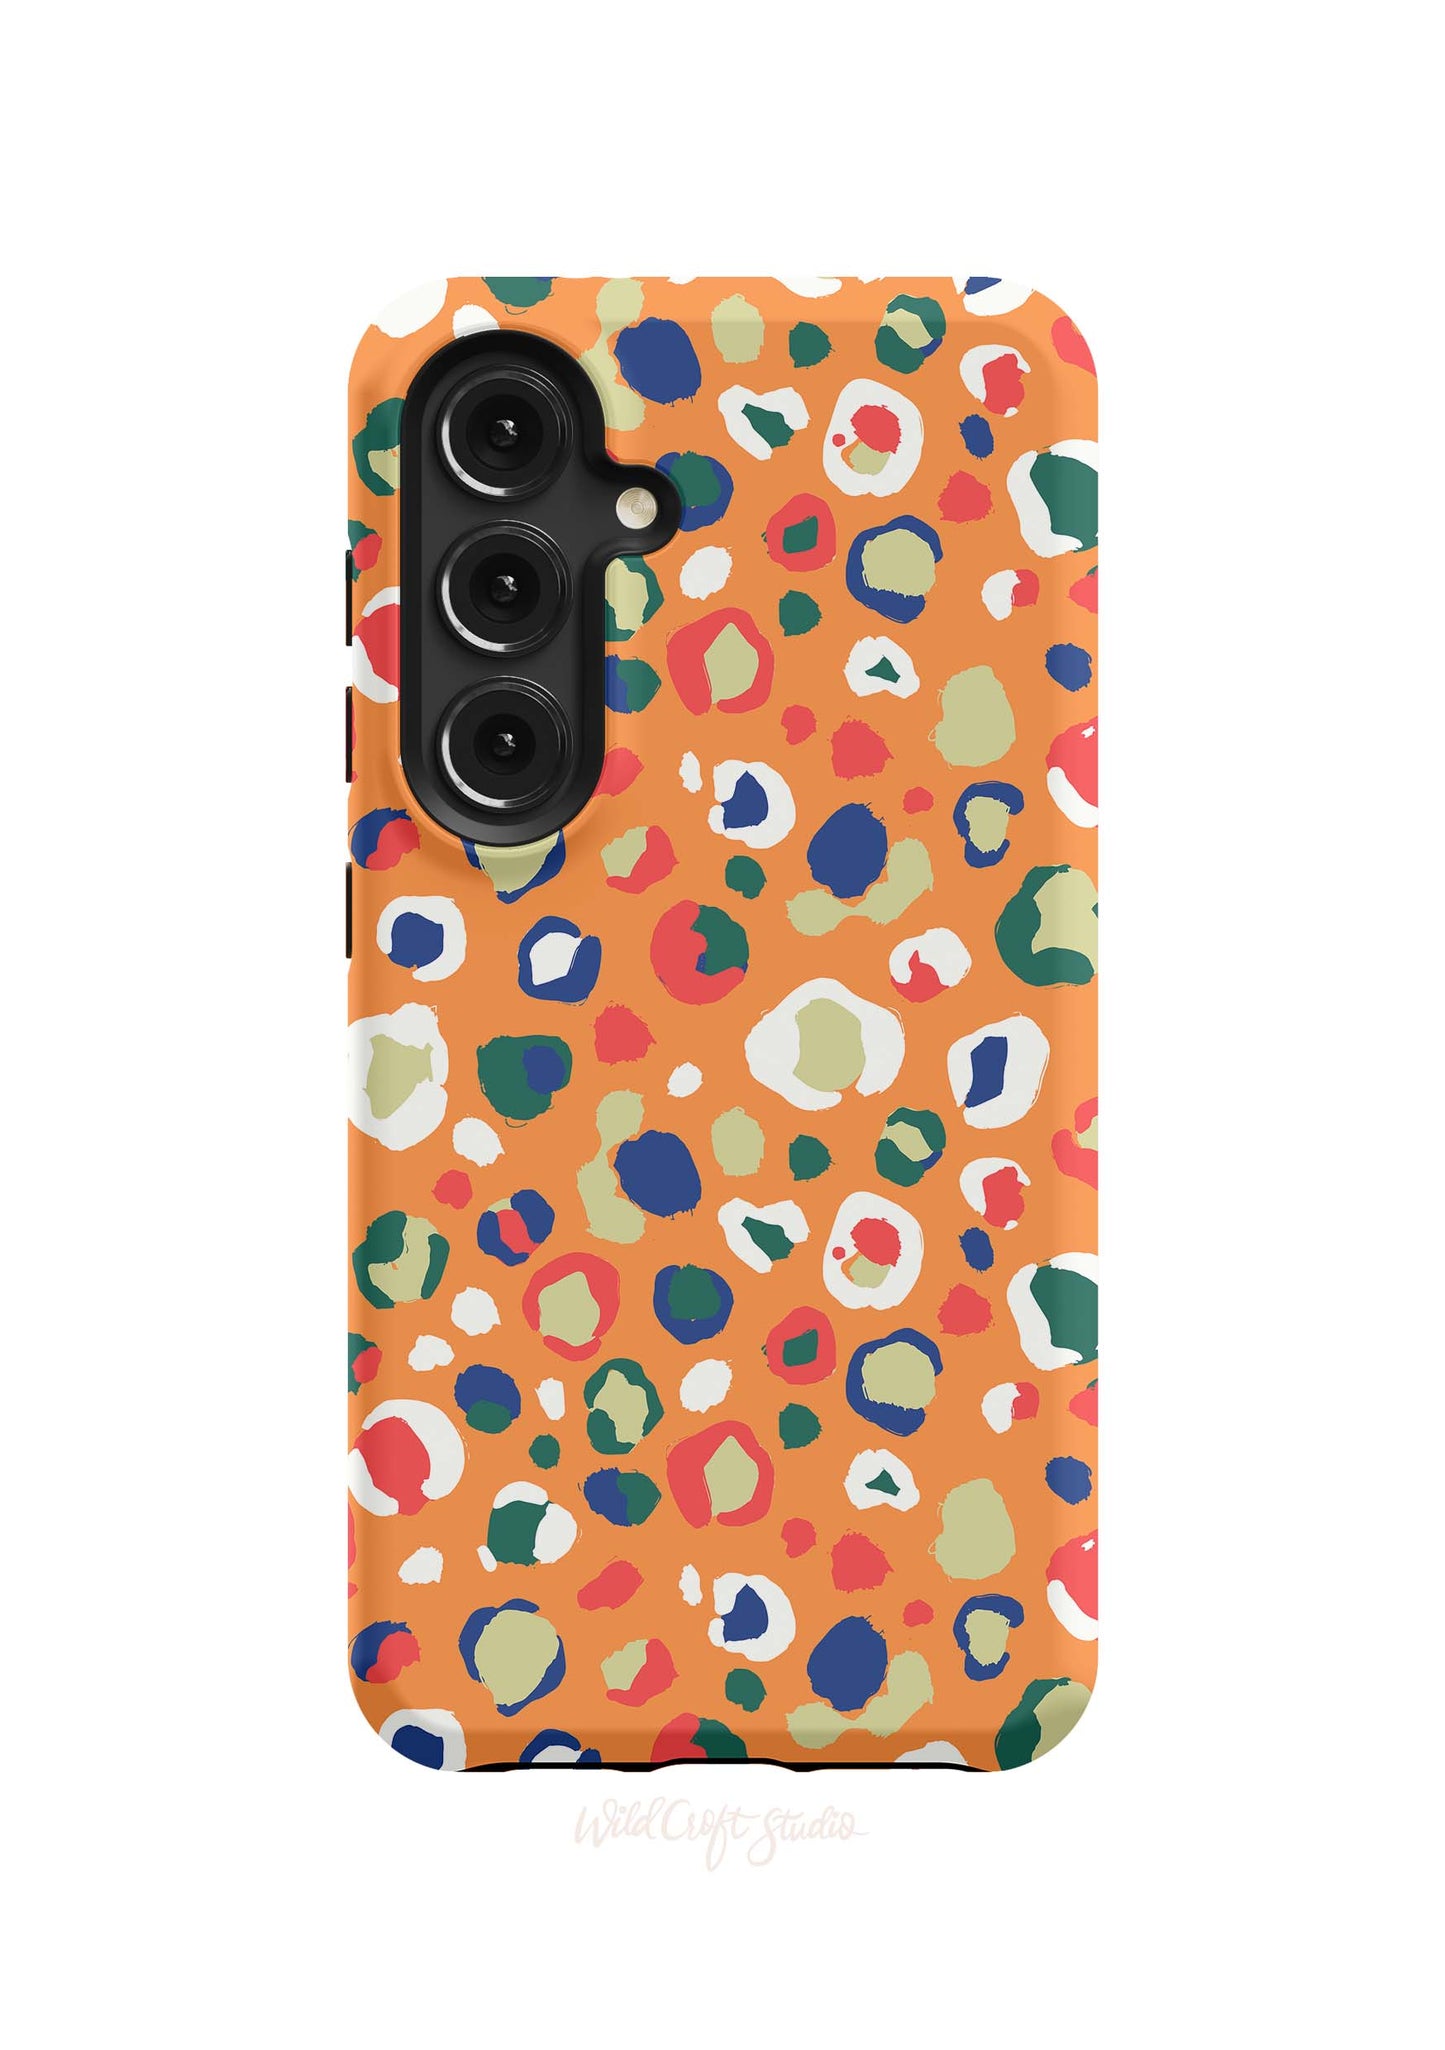 an orange phone case with an animal print